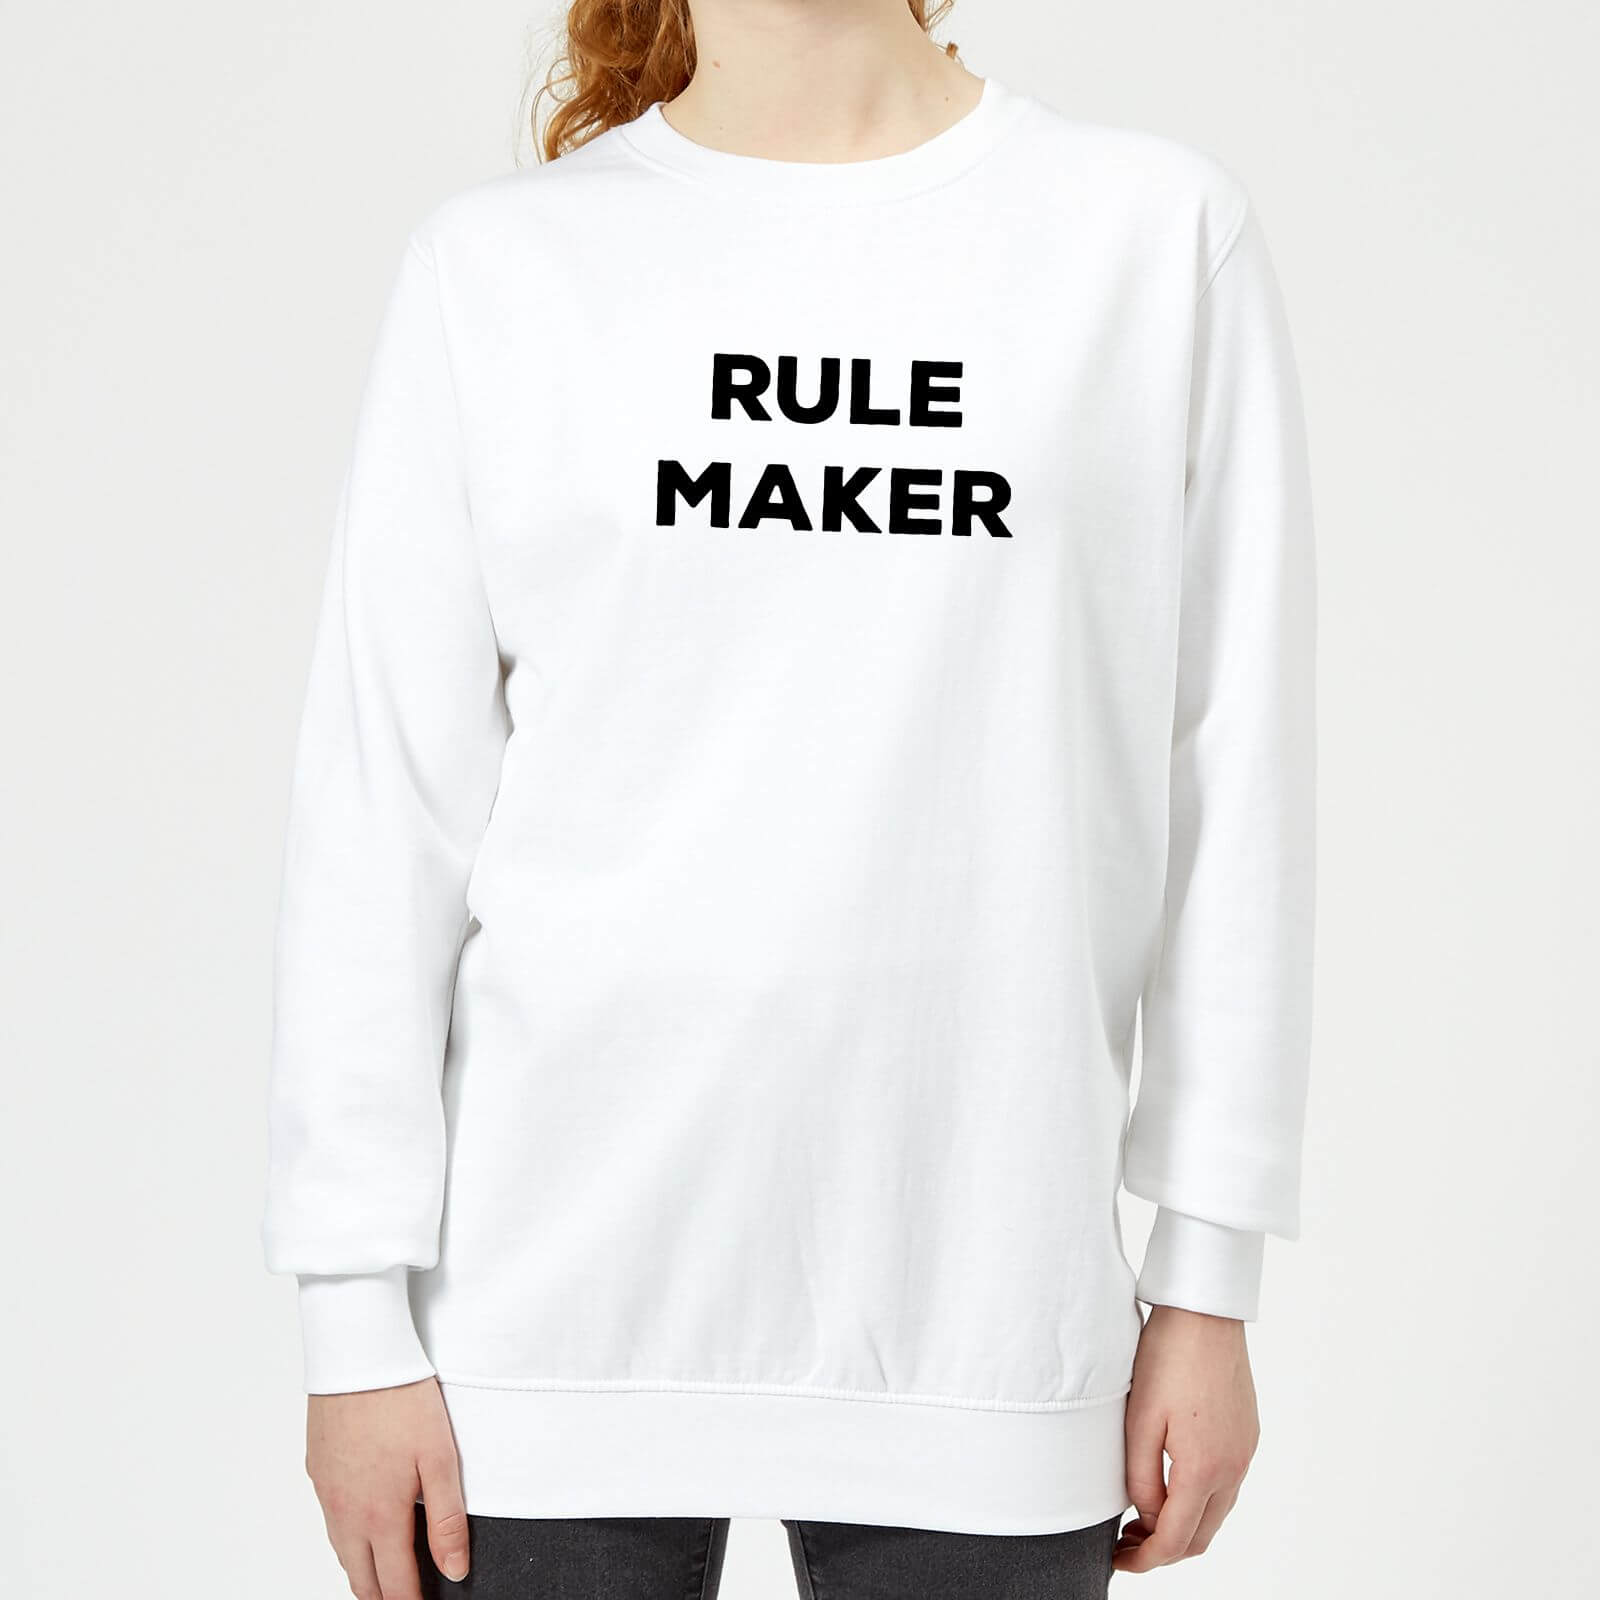 Rule Maker Women's Sweatshirt - White - XL - White